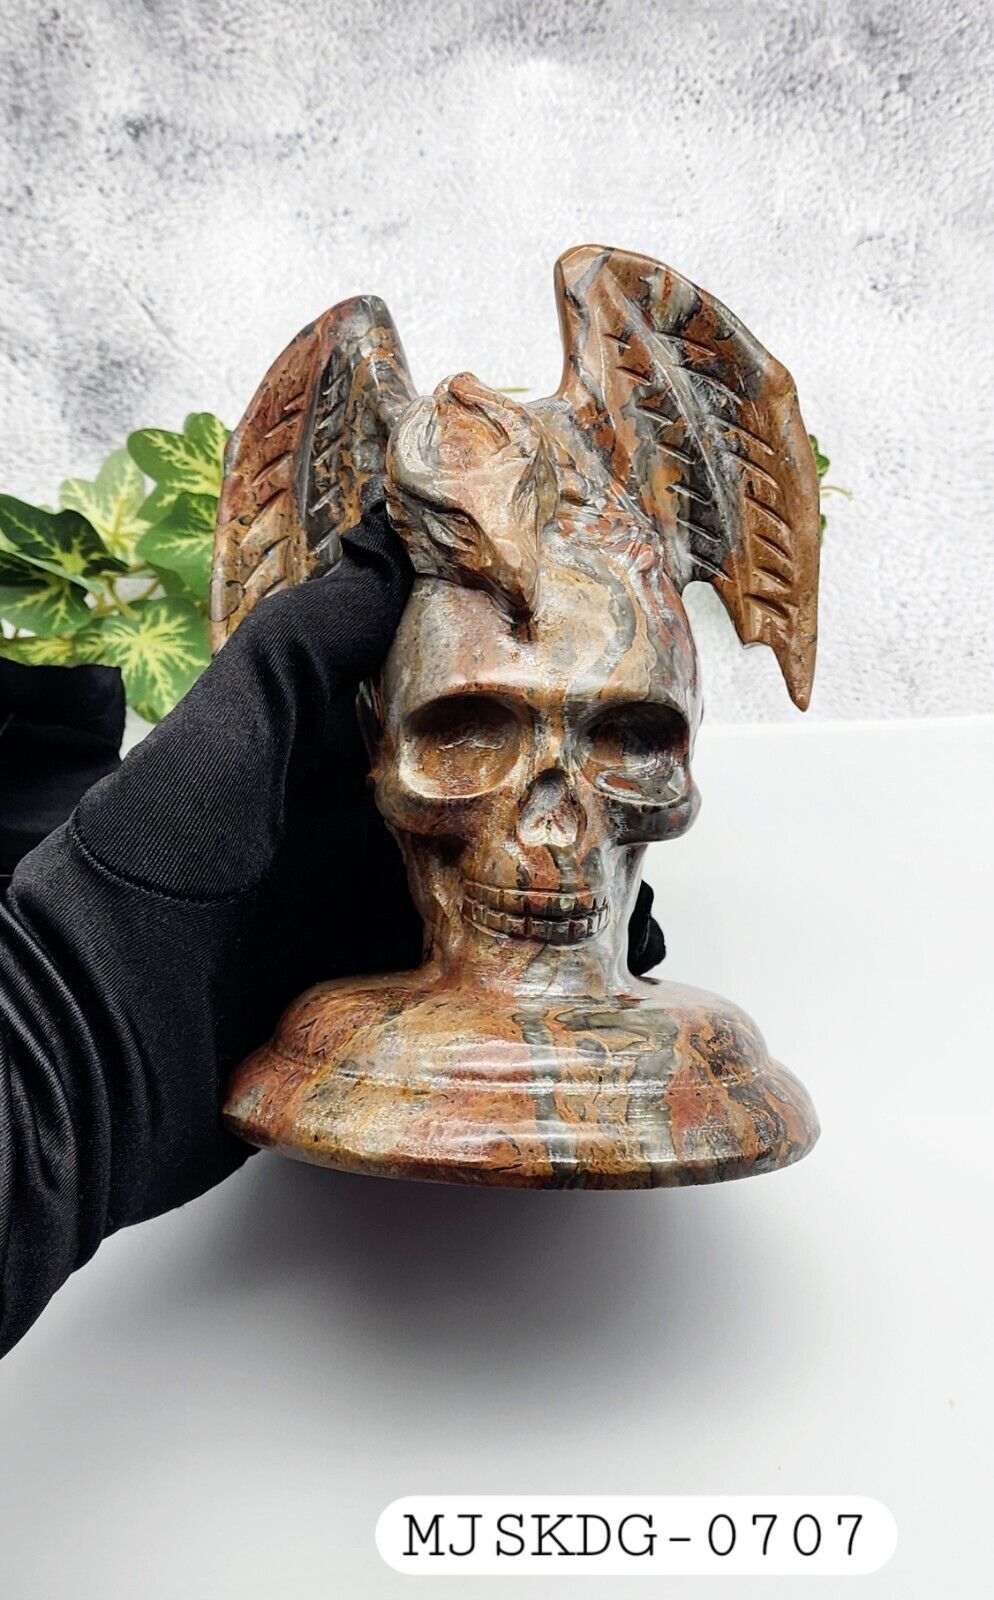 Mountain Jasper Skull With Dragon, Gothic Dragon, Decor, Hand-Carved Skull Large